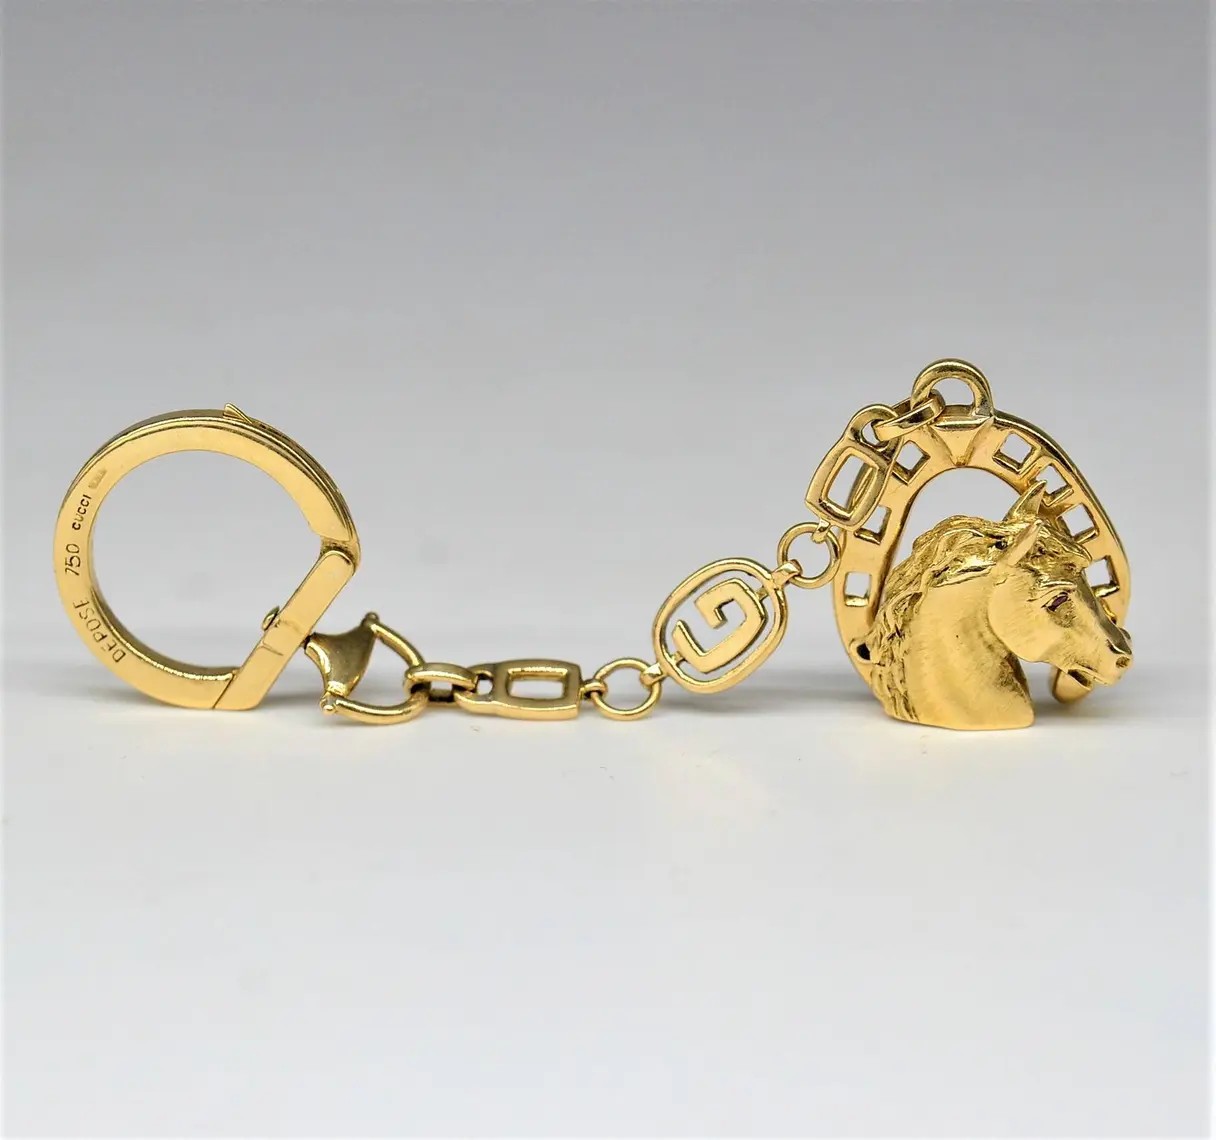 Luxury key ring